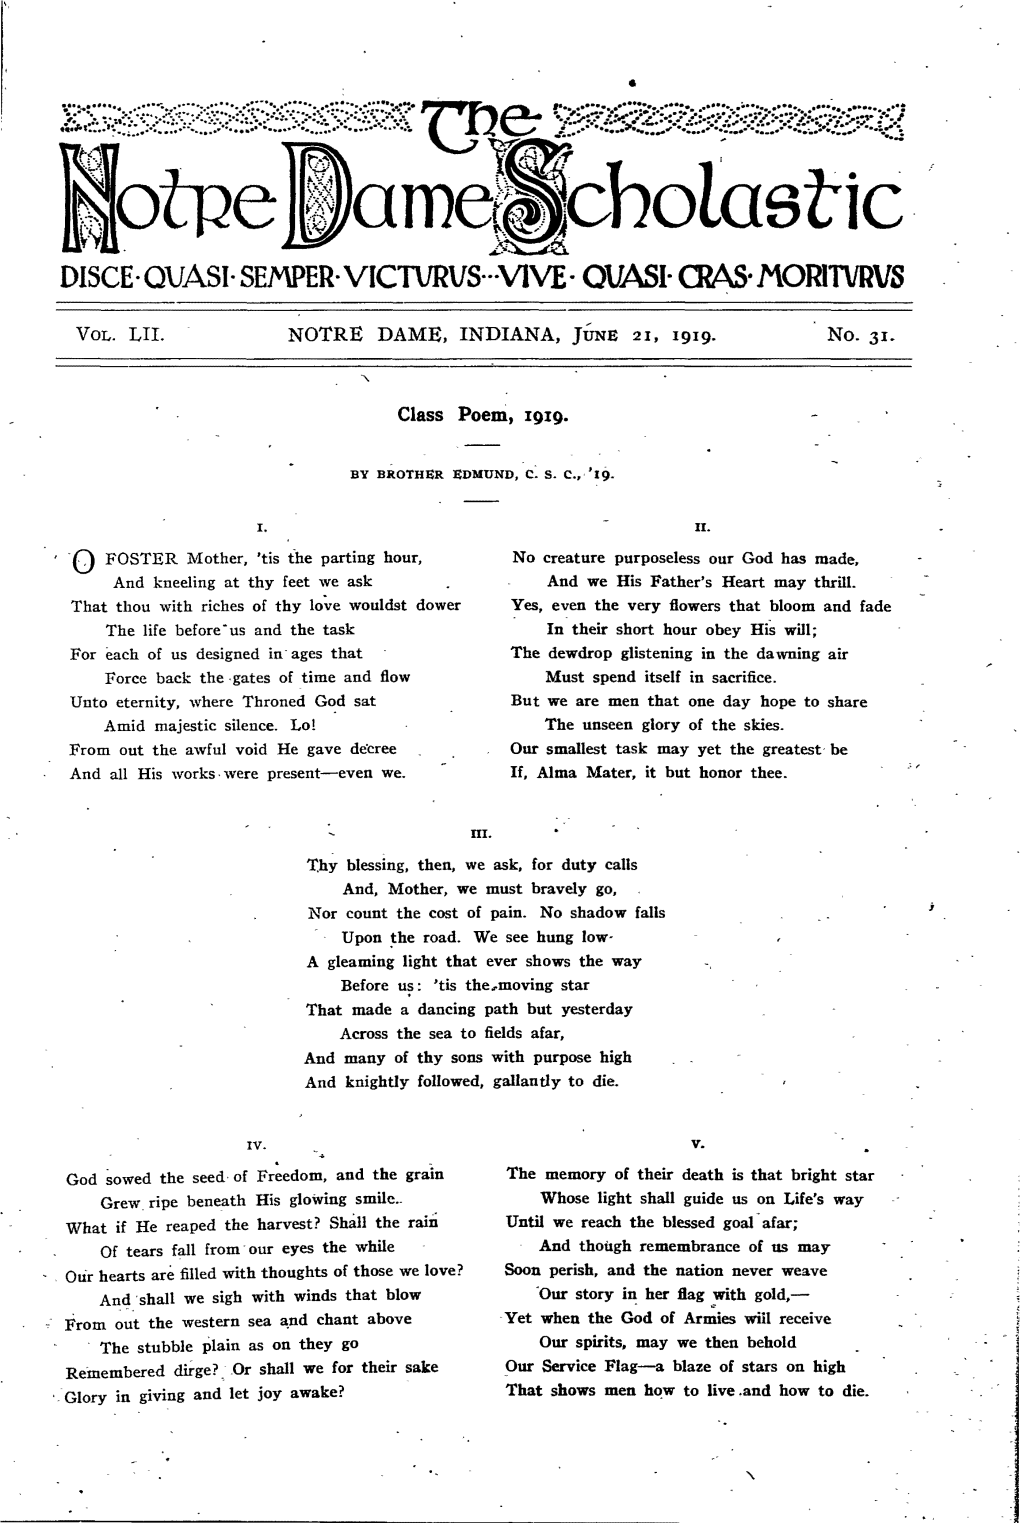 Class Poem, 1919